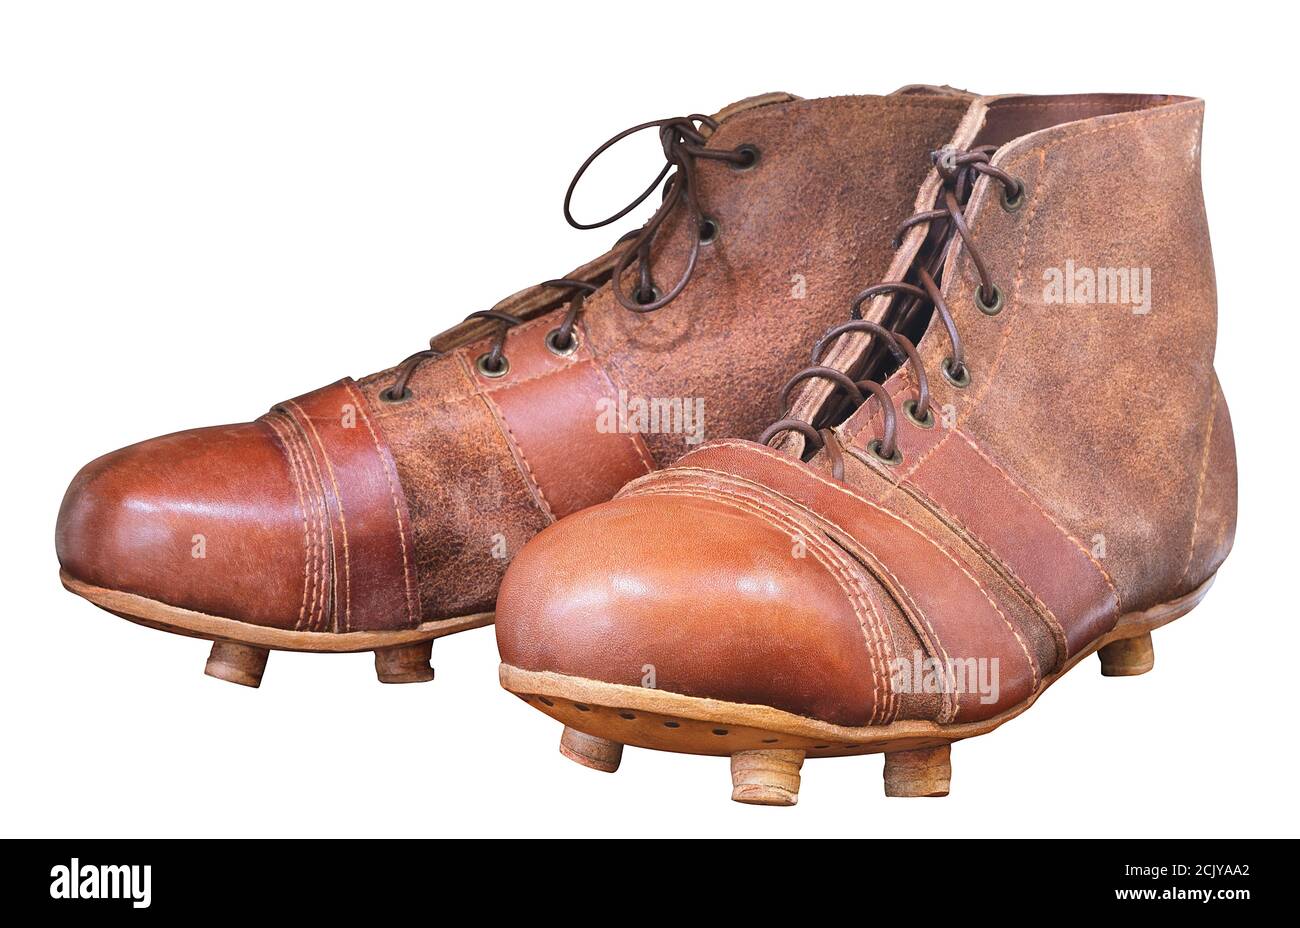 Zapatos de fútbol antiguos fotografías e imágenes alta resolución - Alamy